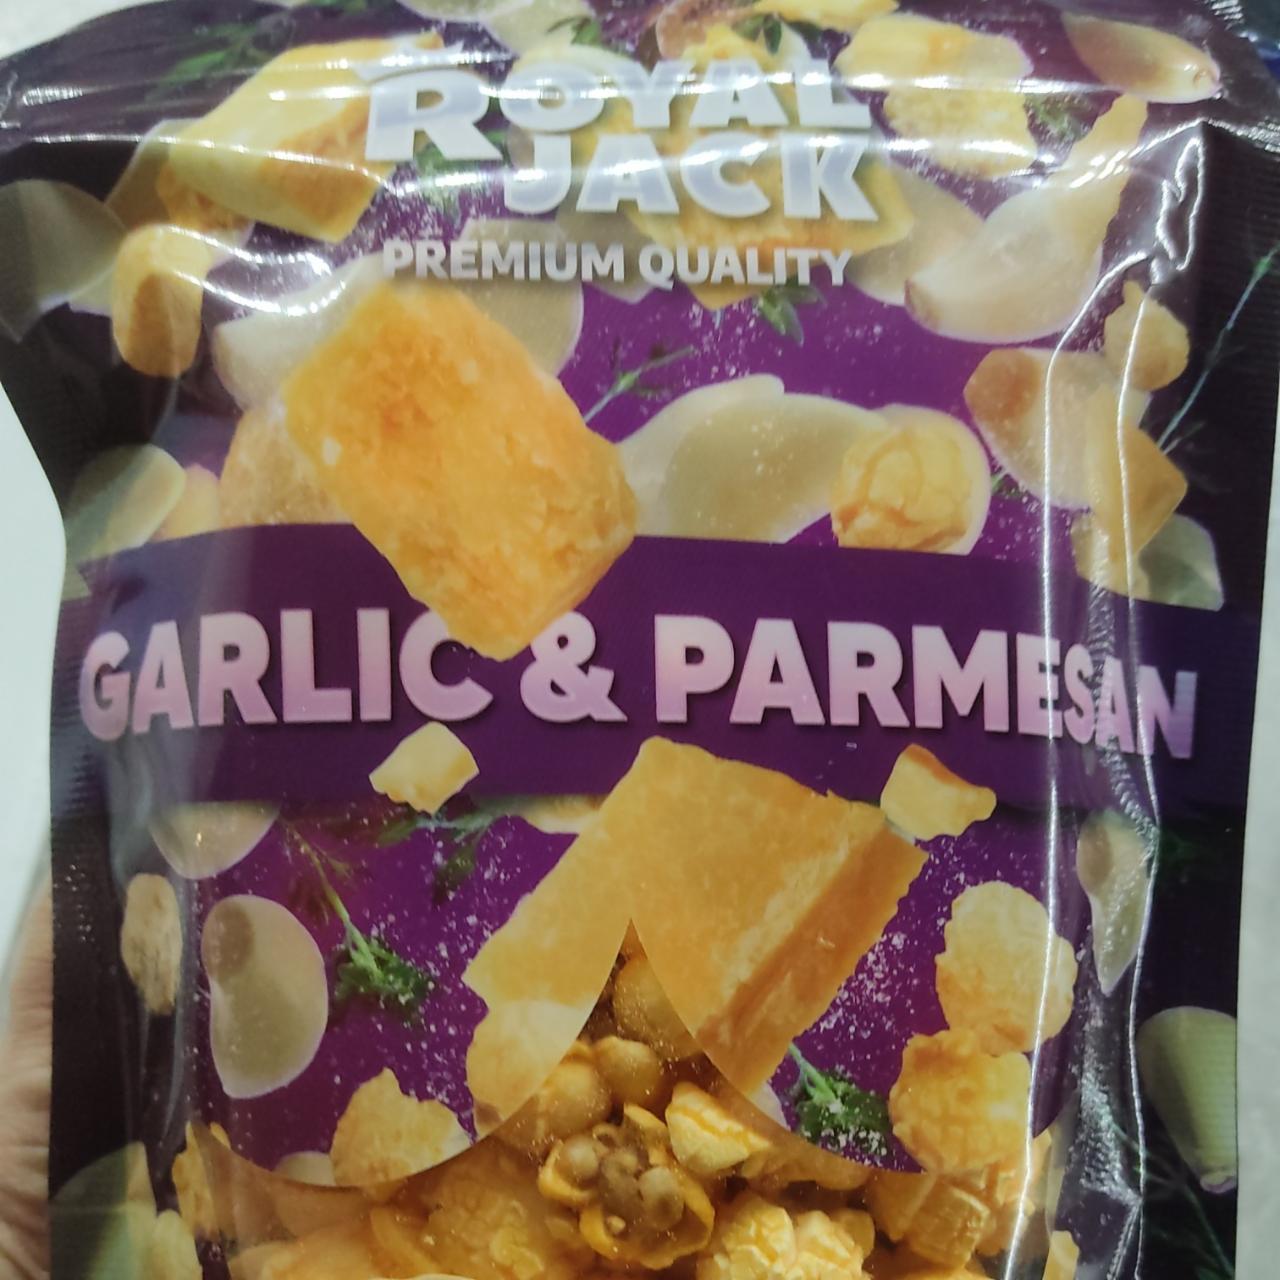 Fotografie - Garlic & parmesan Royal Jack